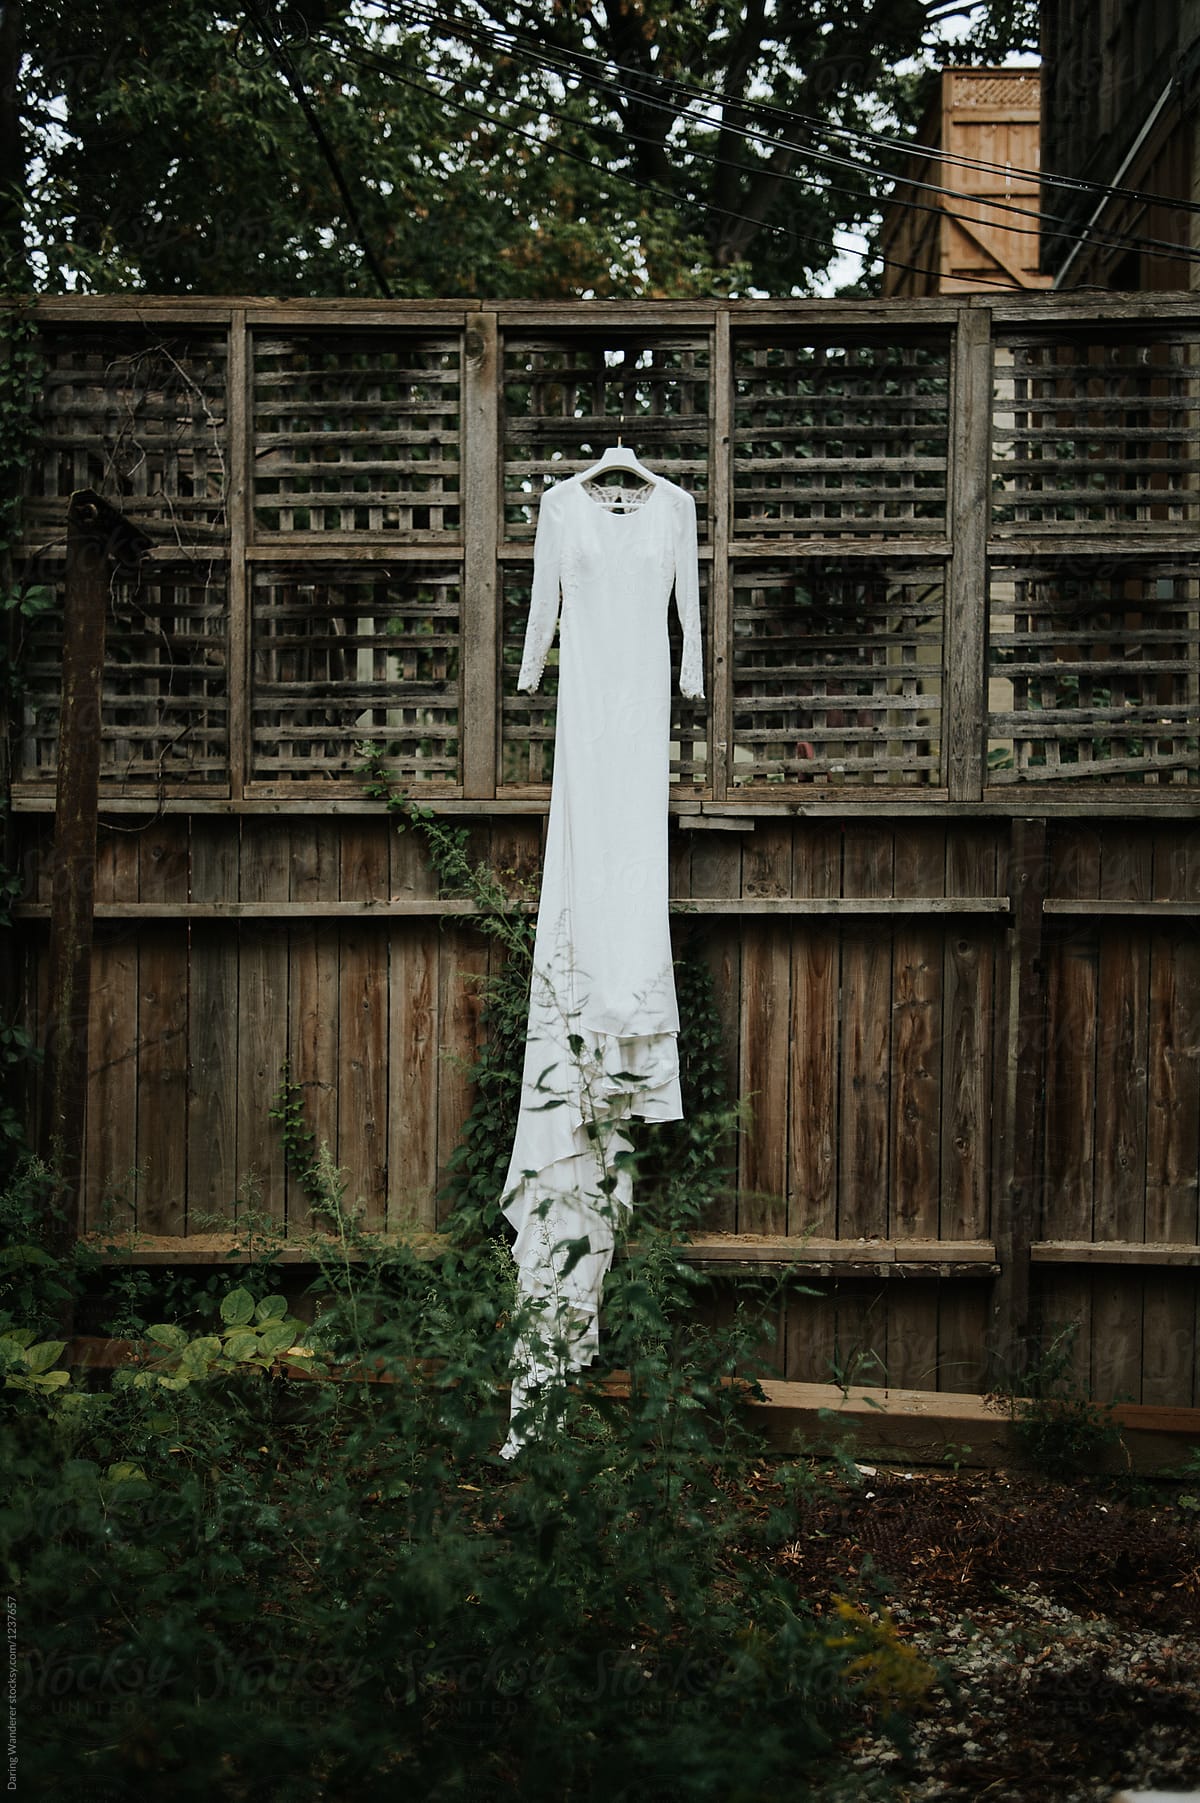 Classy minimalist wedding dress hanging on fence in overgrown ivy garden